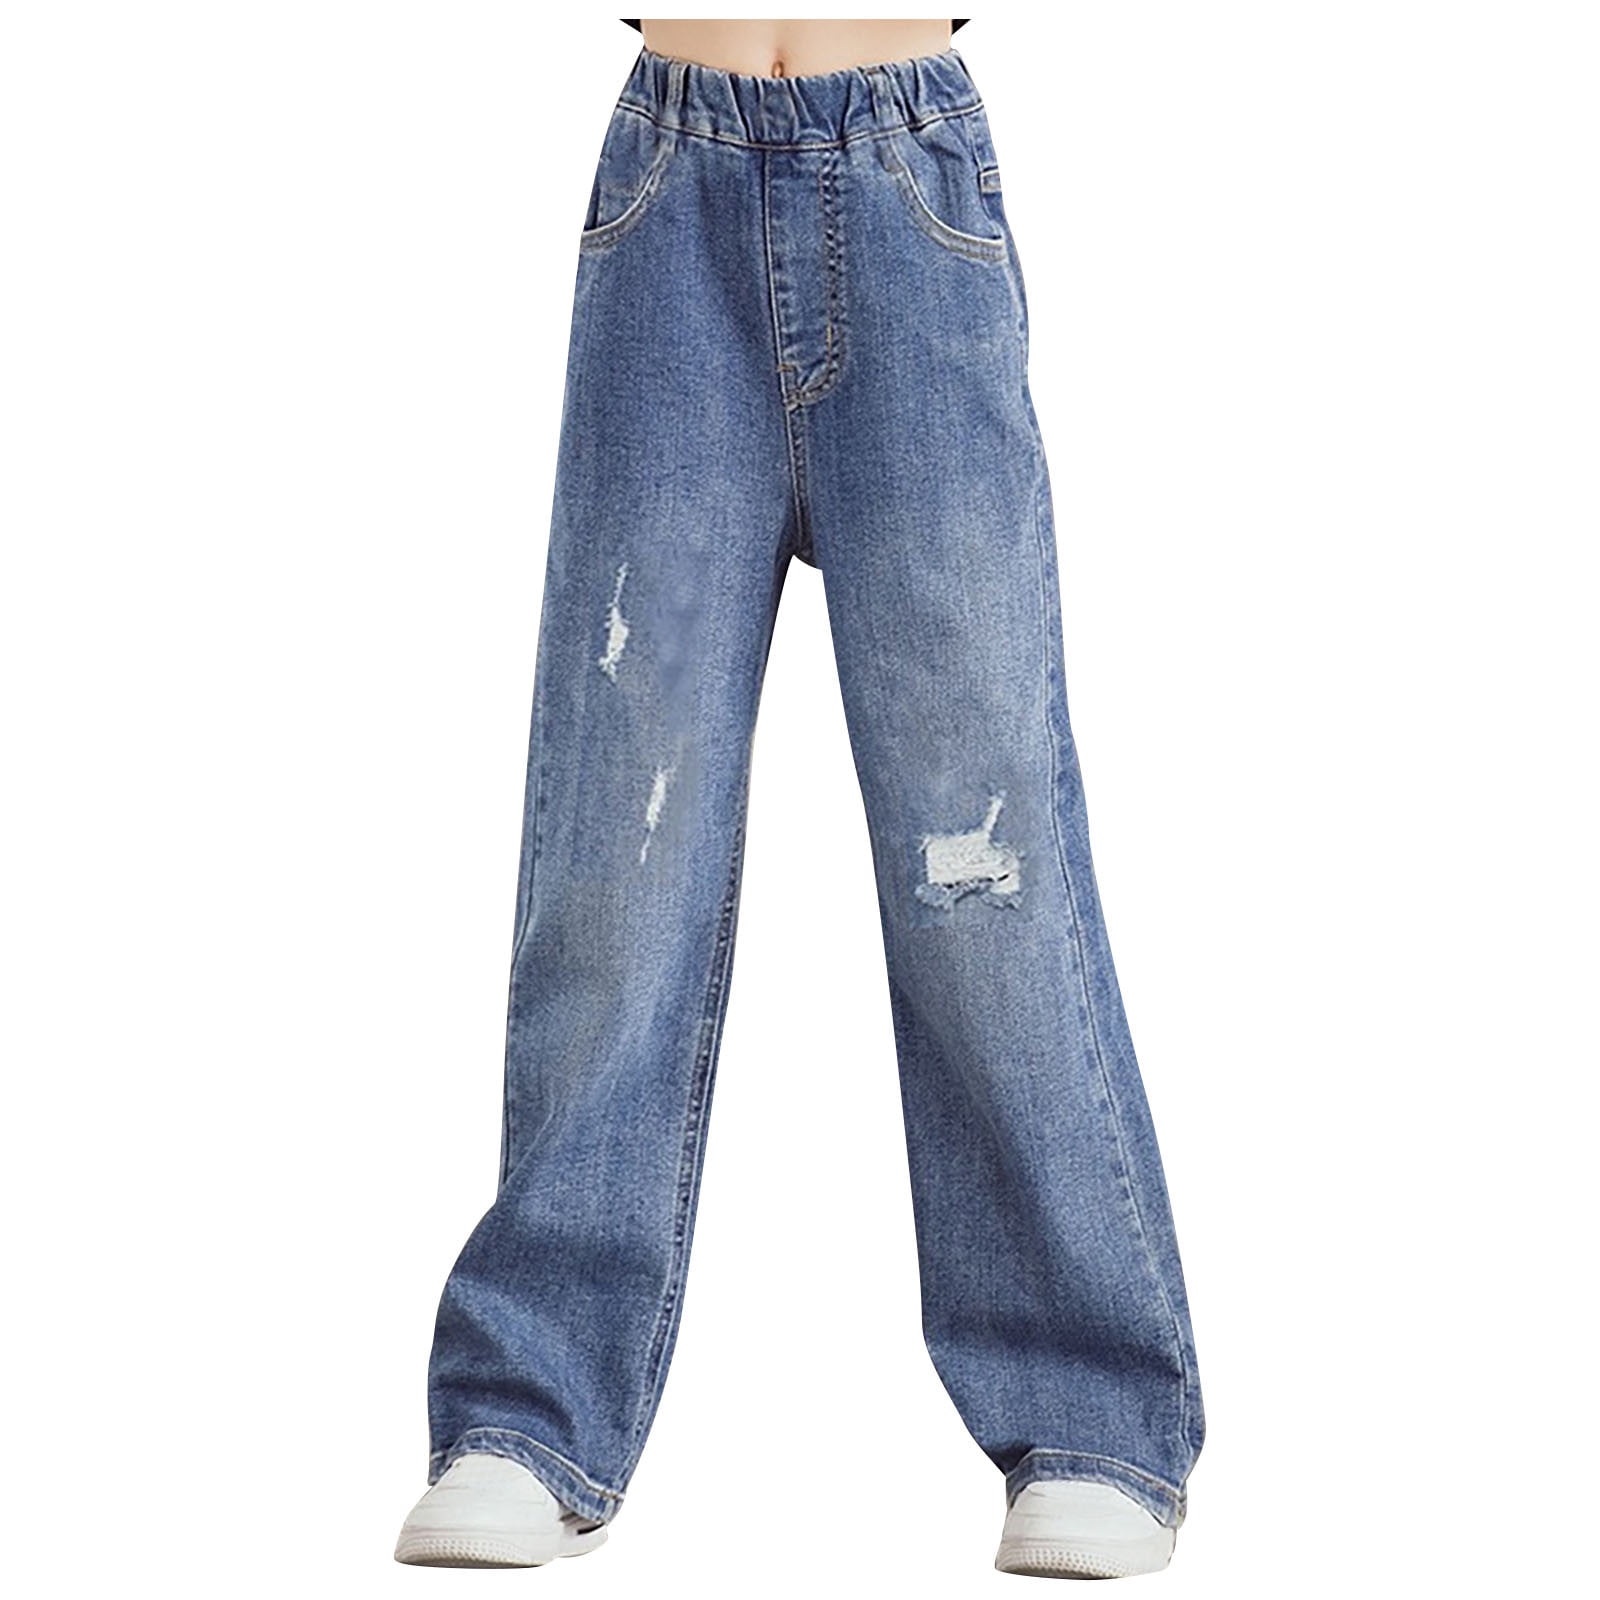 DxhmoneyHX Kids Girls Jeans Elastic Waist Ripped Denim Pants Straight ...